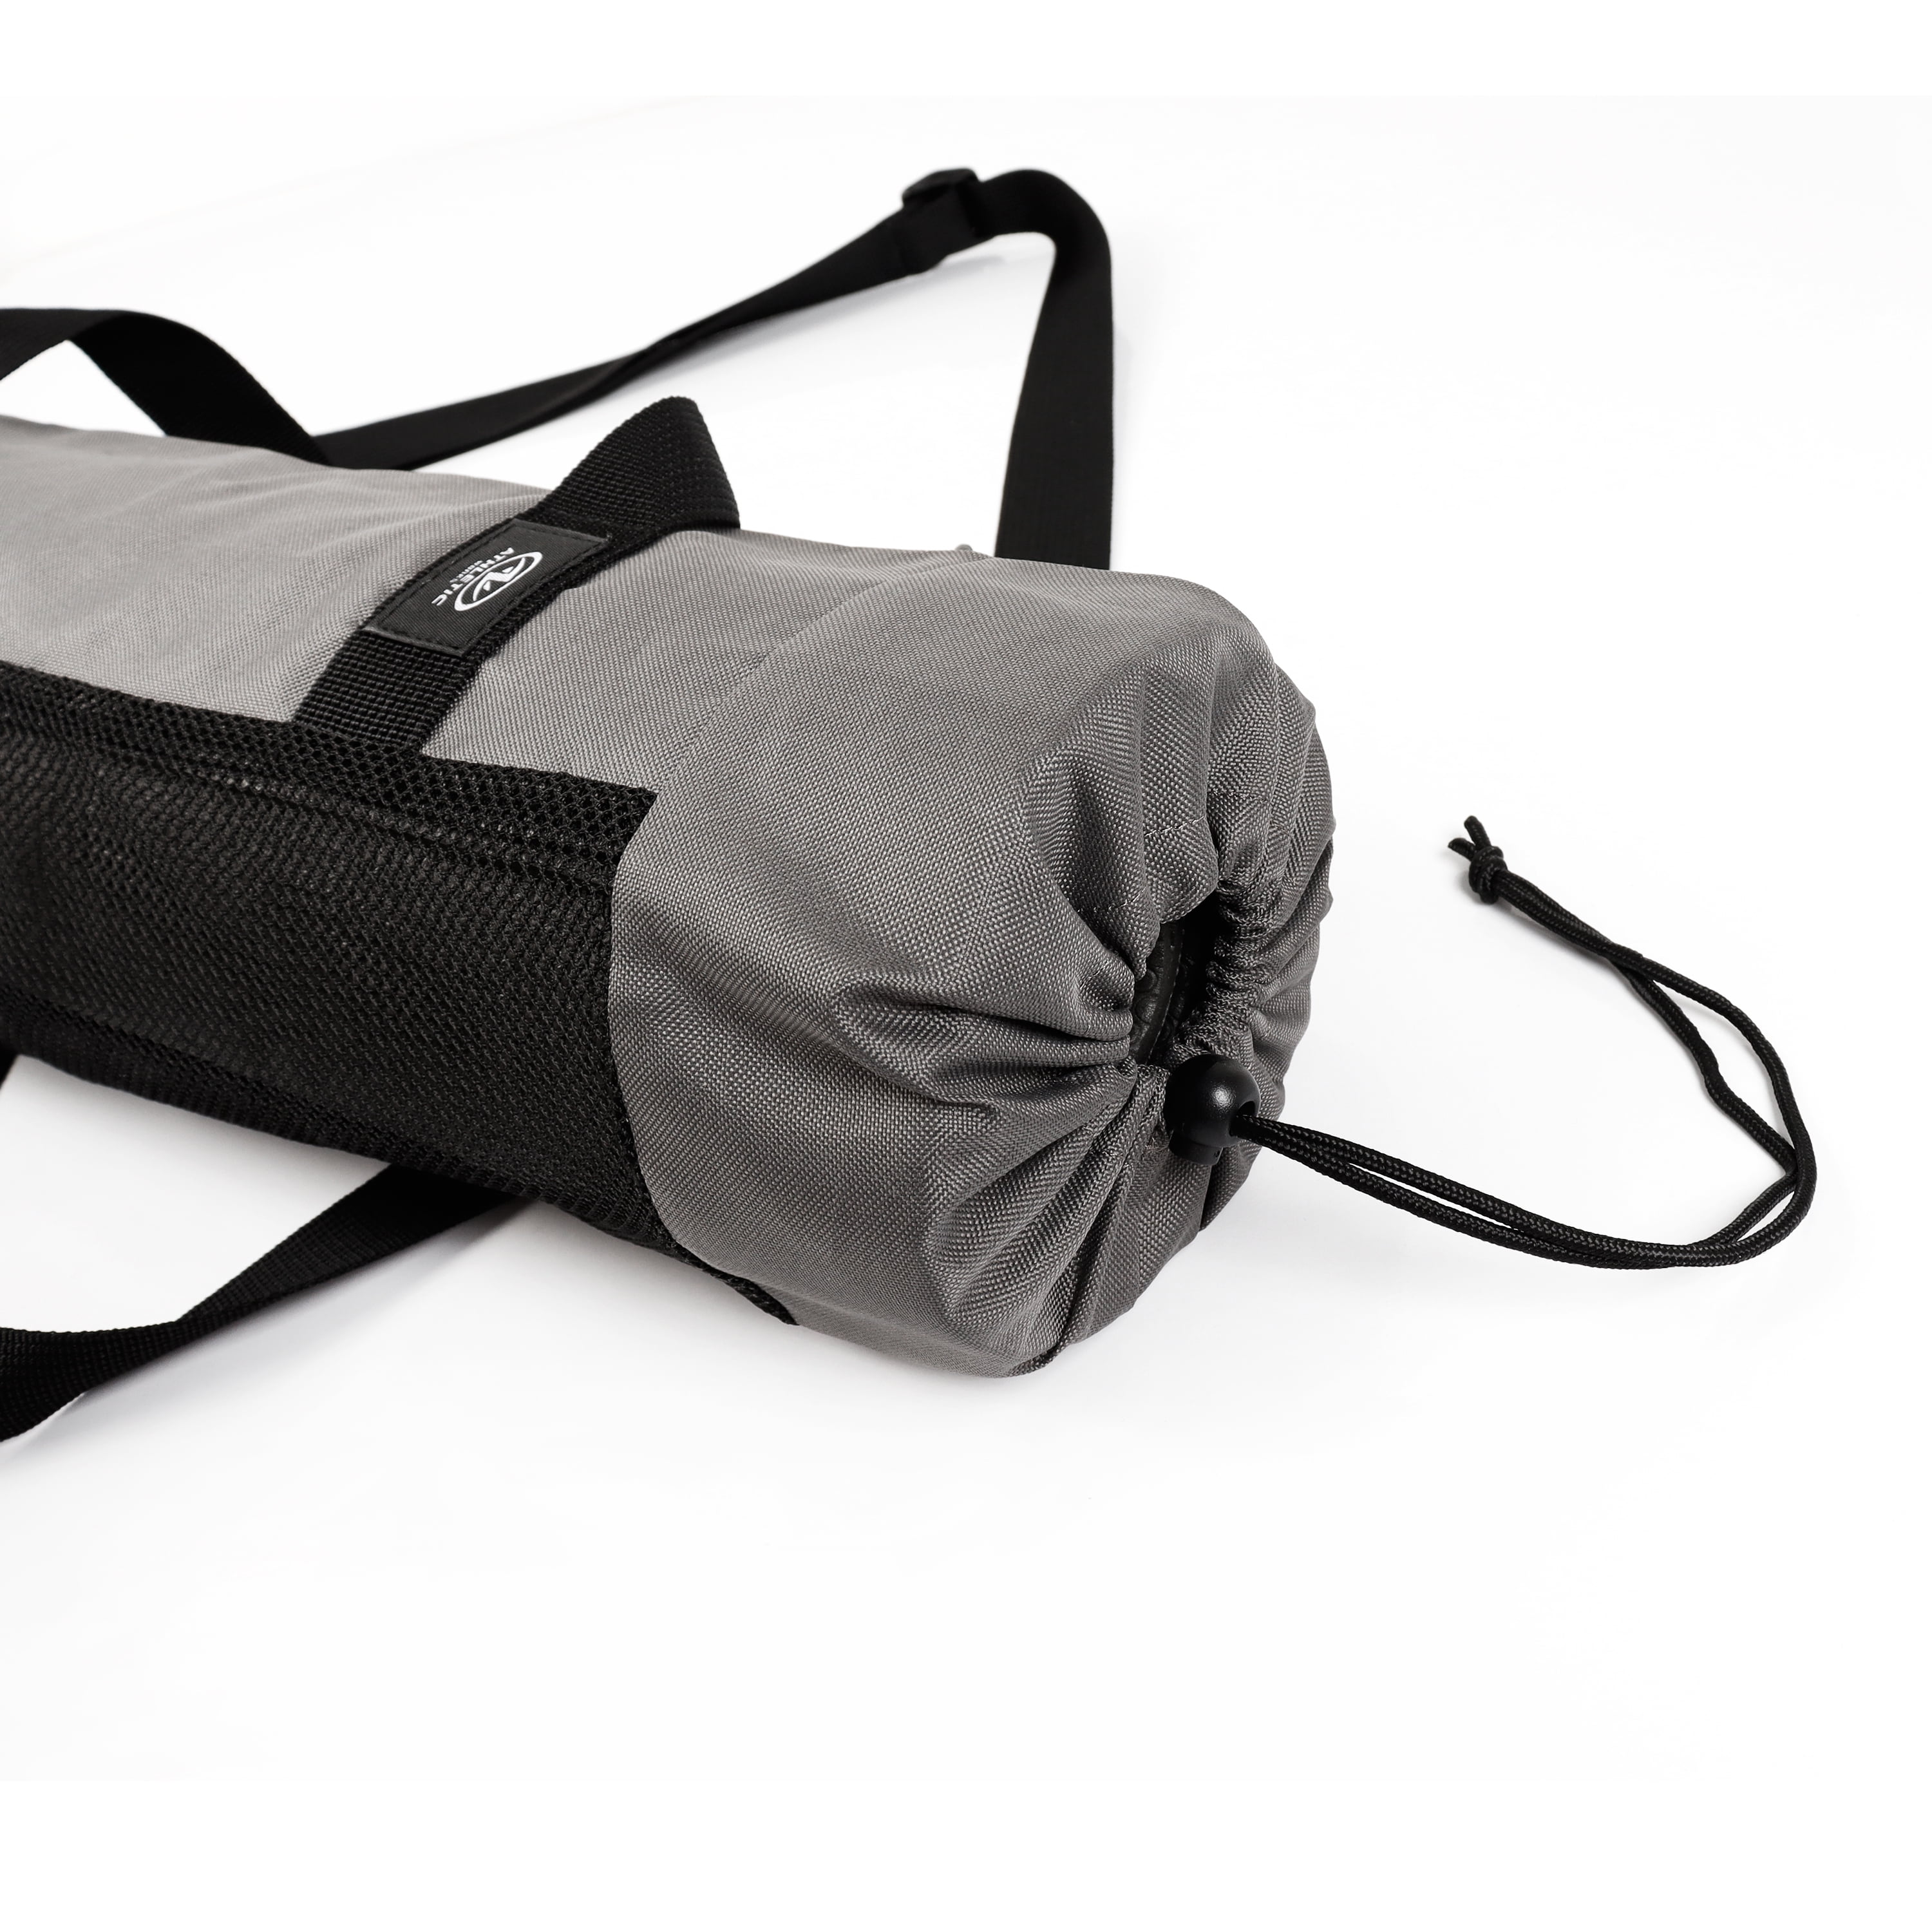 Athletic Works Yoga Bag, Adjustable, Fits Most Yoga Mats, 26 L x